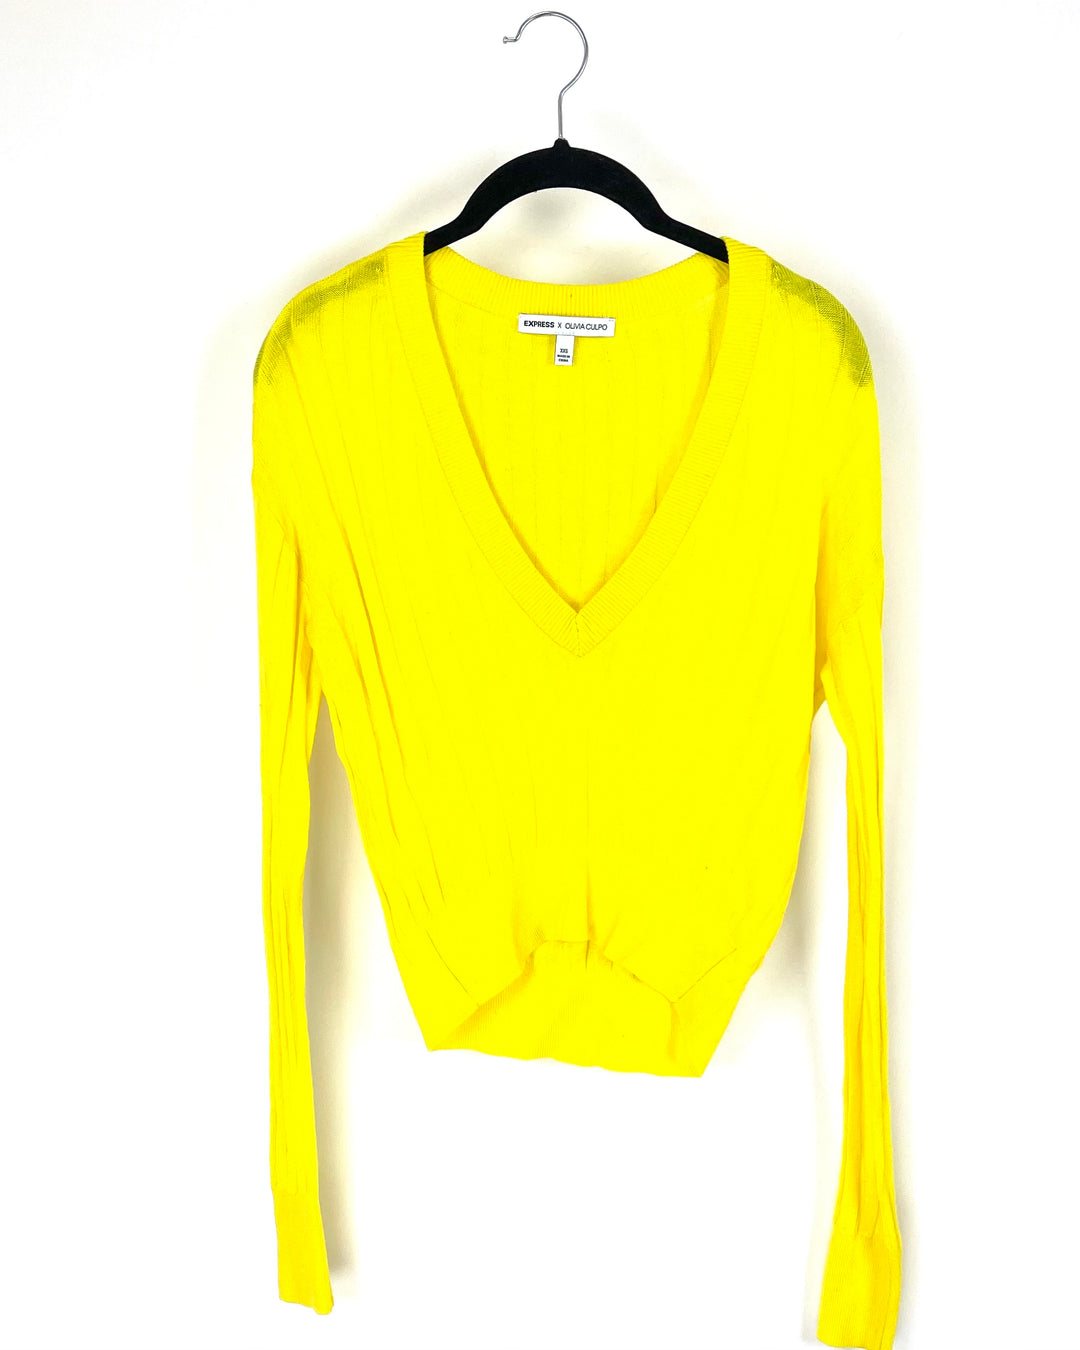 Bright Yellow Cropped Knit Sweater - Size 2/4